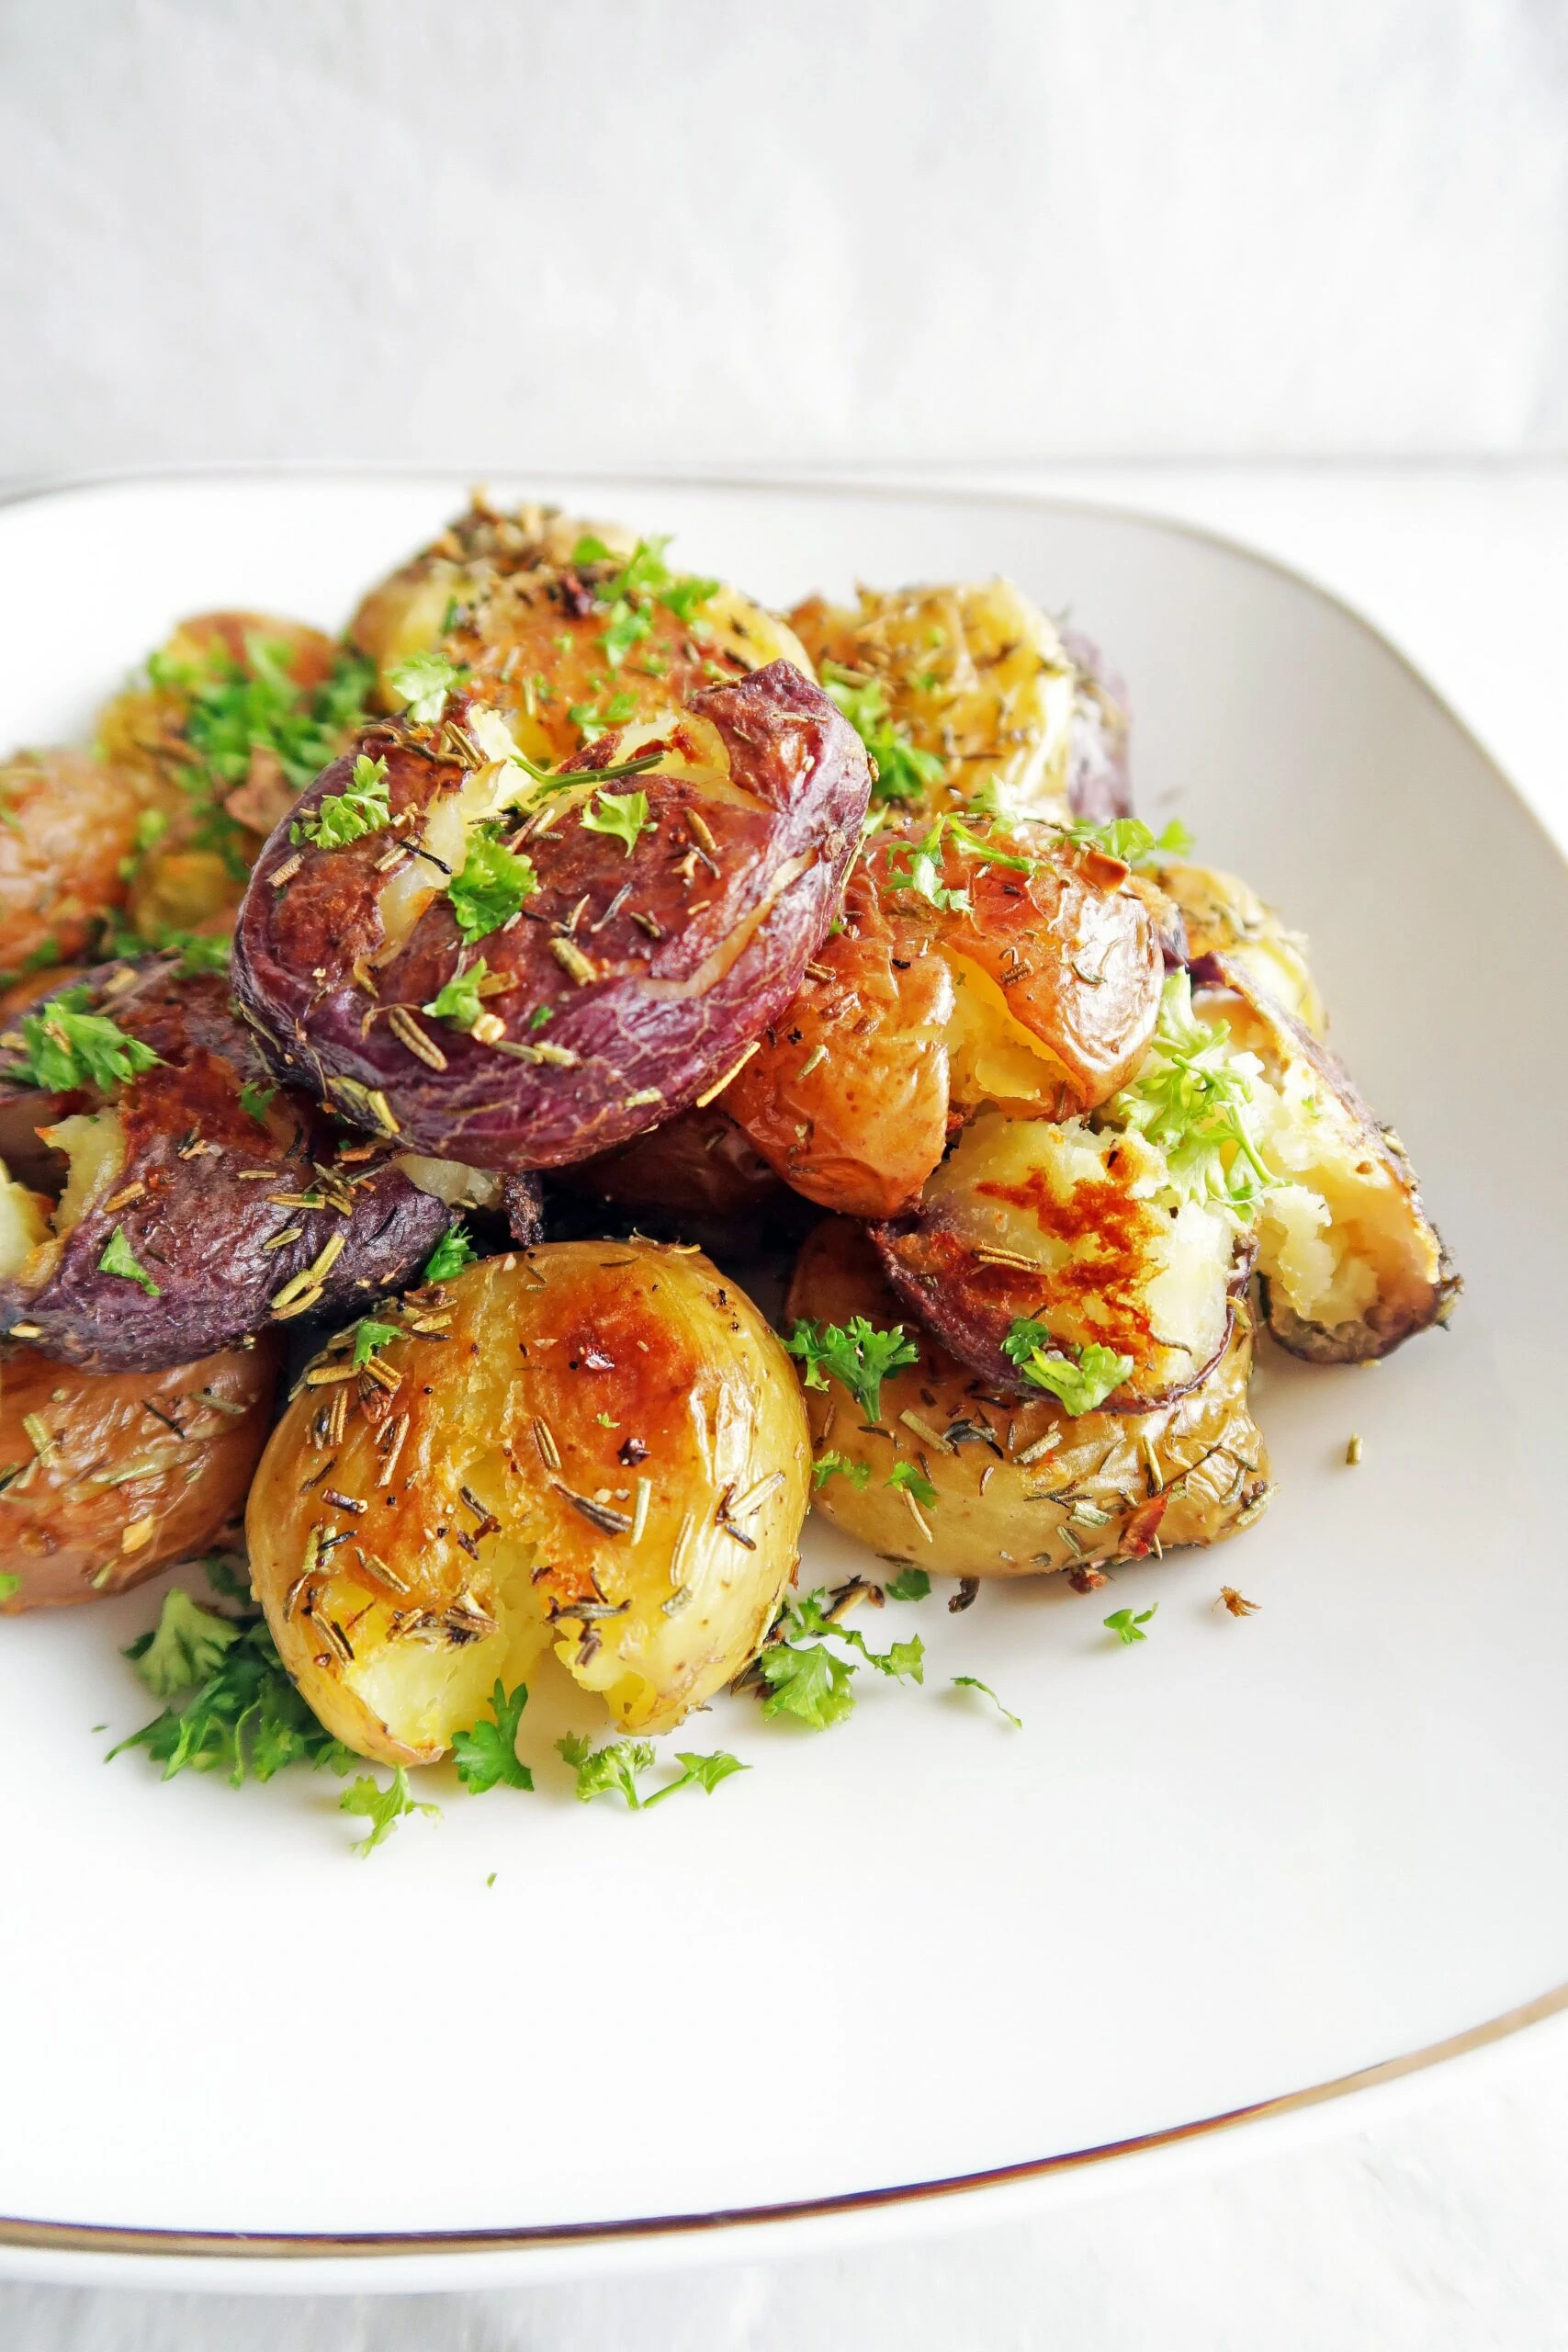 Garlic Smashed Potatoes Recipe - How To Make Garlic Smashed Potatoes